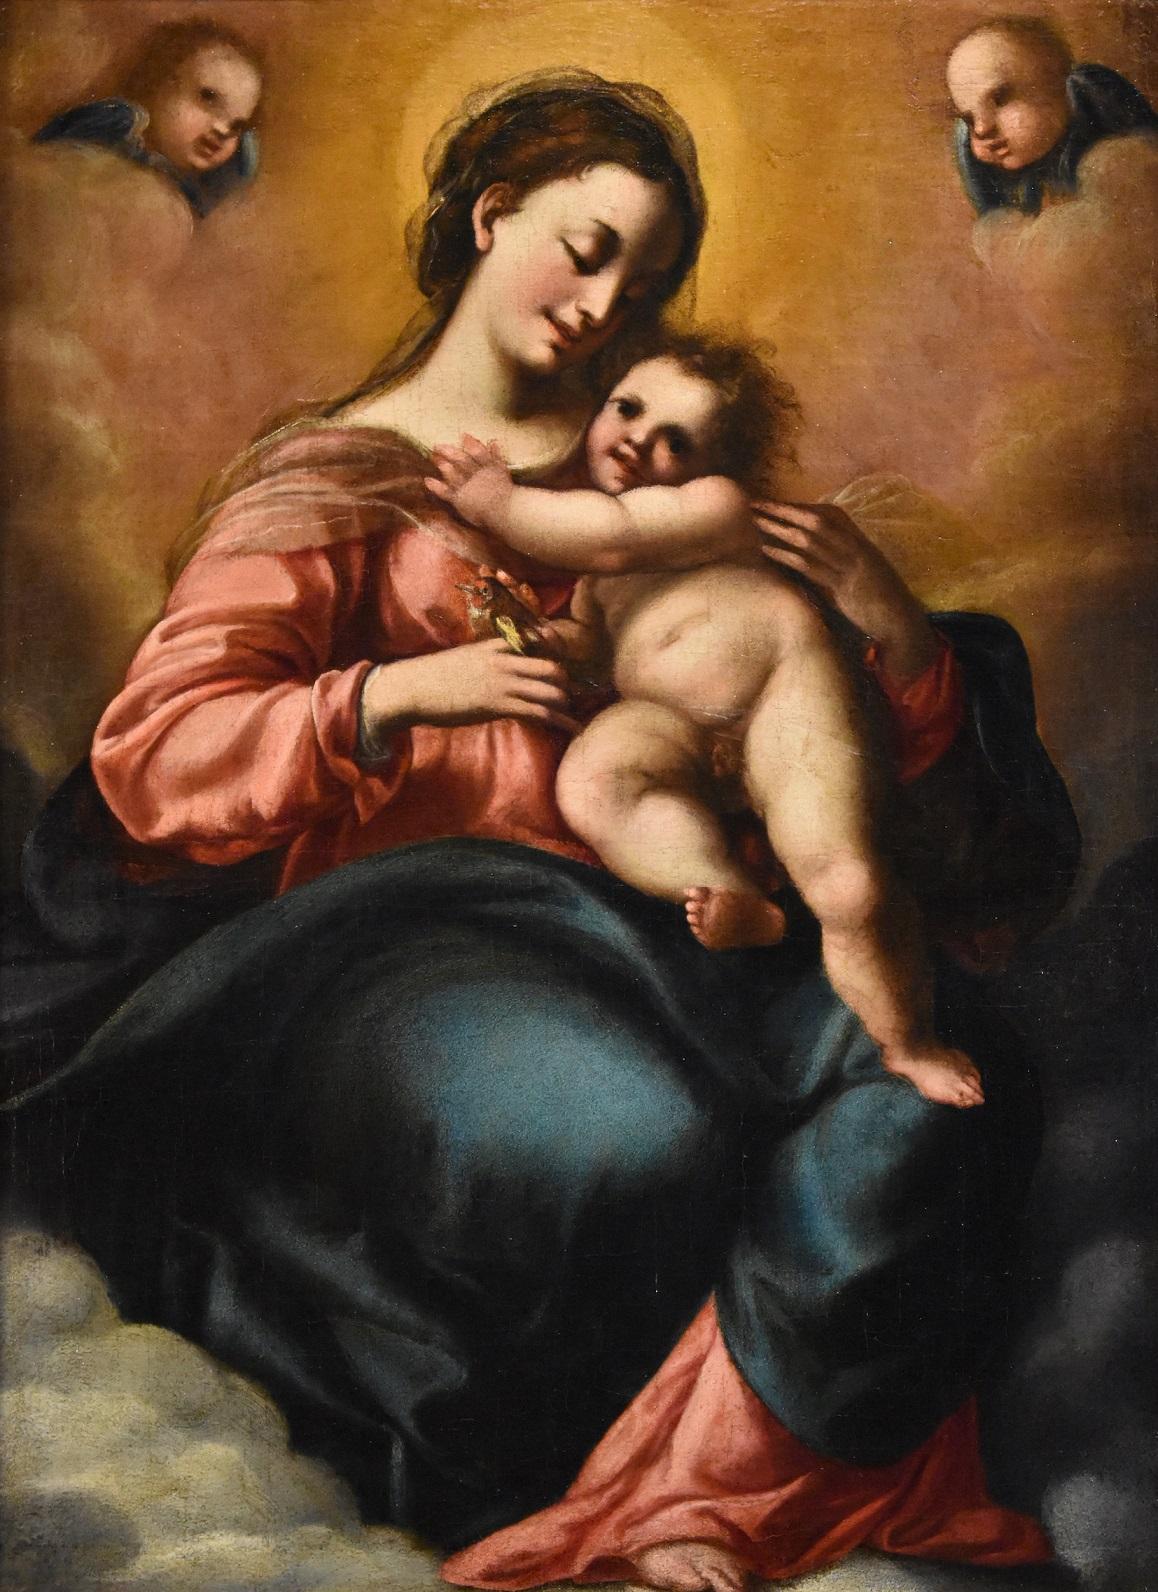 Confortini Maria Madonna Engel Gemälde Öl auf Leinwand Alter Meister 17. Jahrhundert Italien (Alte Meister), Painting, von Jacopo Confortini (Florence 1602-1672)